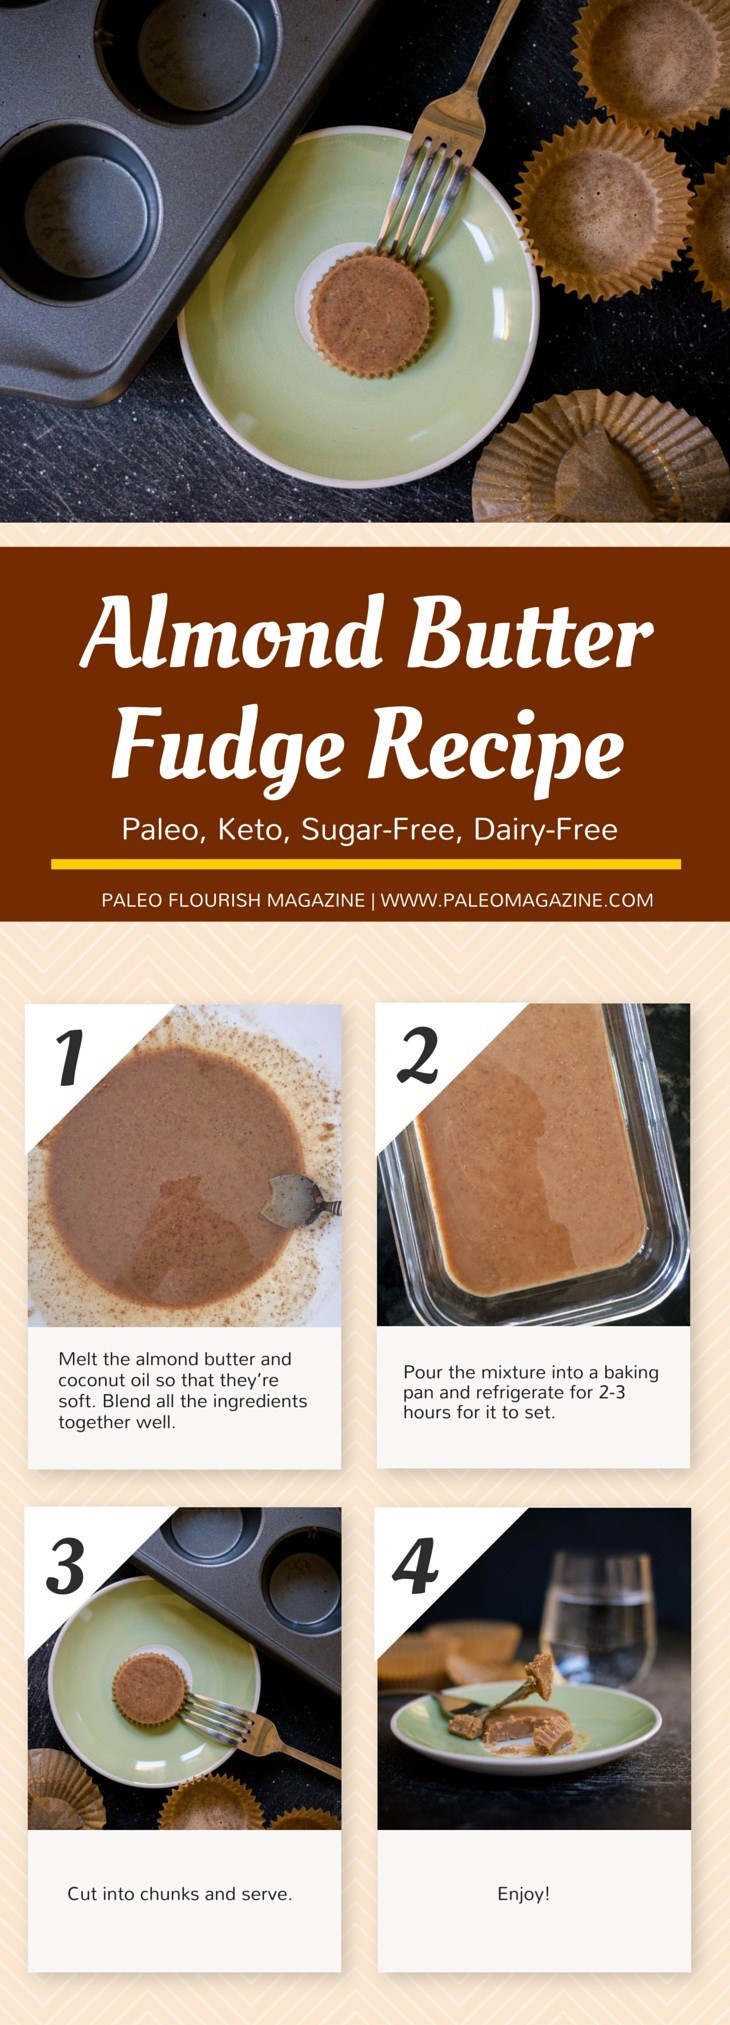 Keto Almond Butter Fudge Recipe [Paleo, Keto, Sugar-Free, Dairy-Free] #paleo #recipes #glutenfree https://ketosummit.com/almond-butter-fudge-recipe-paleo-keto-sugarfree-dairyfree